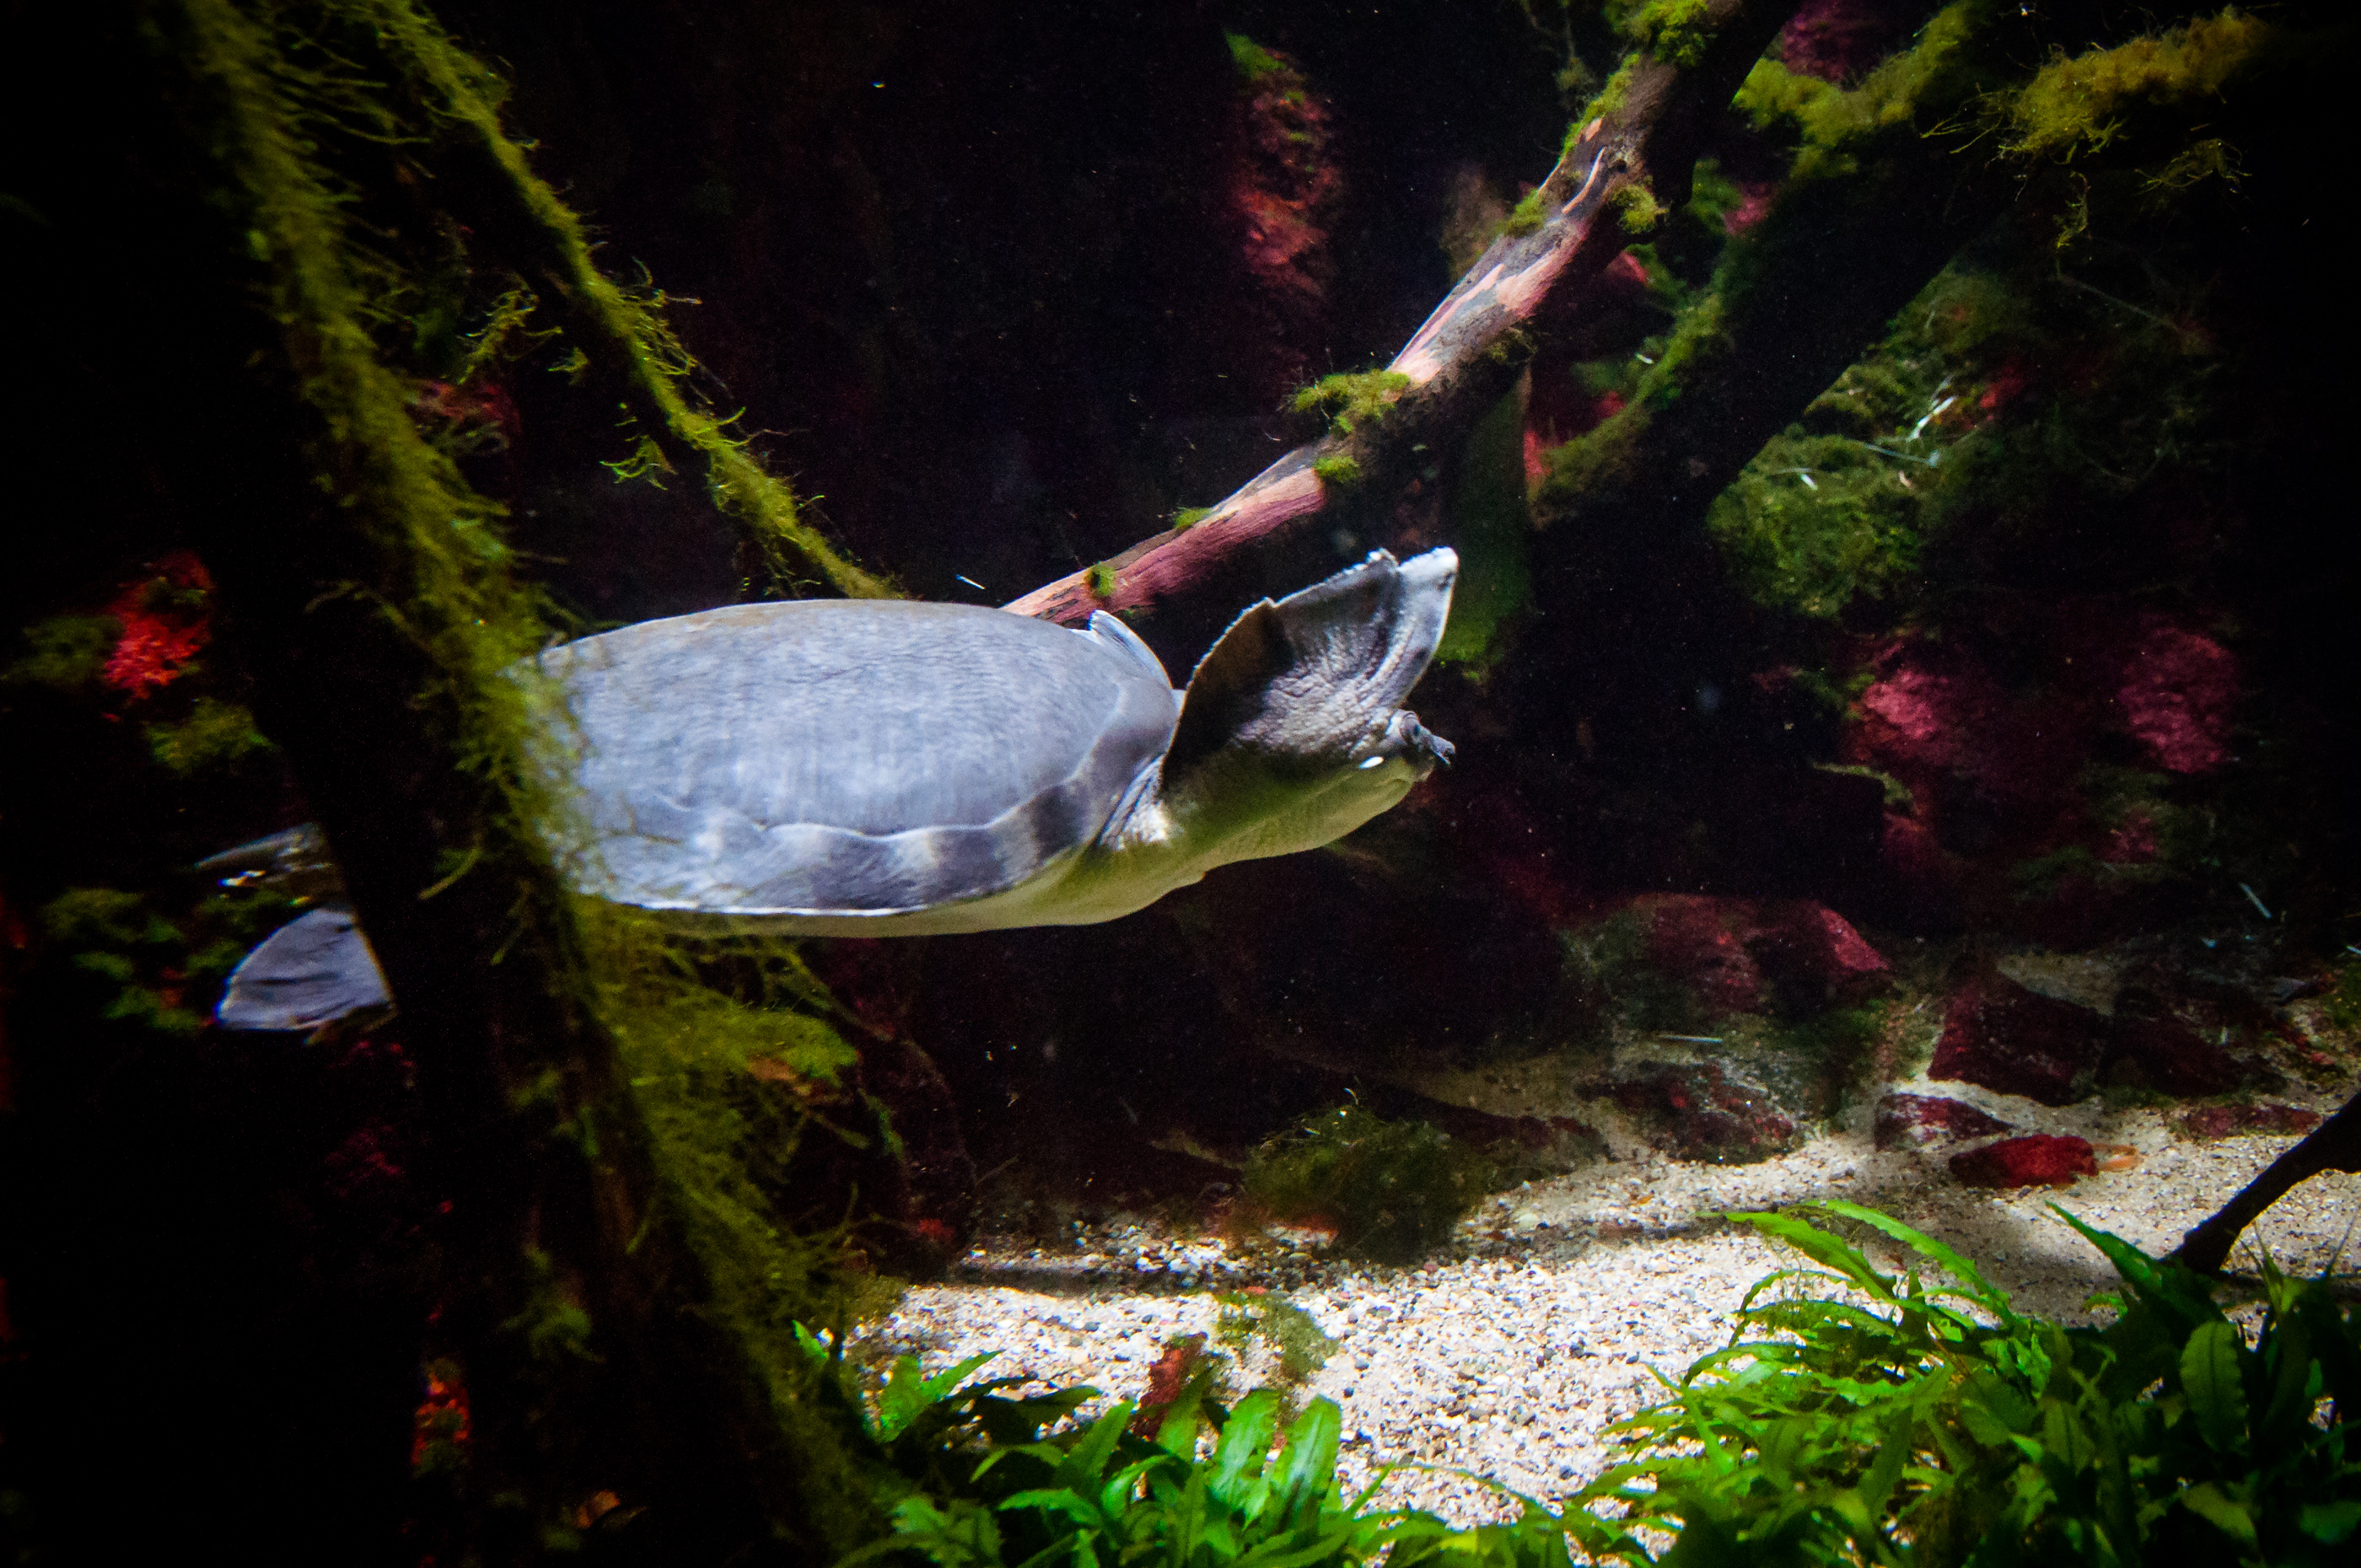 Turtle swimming photo